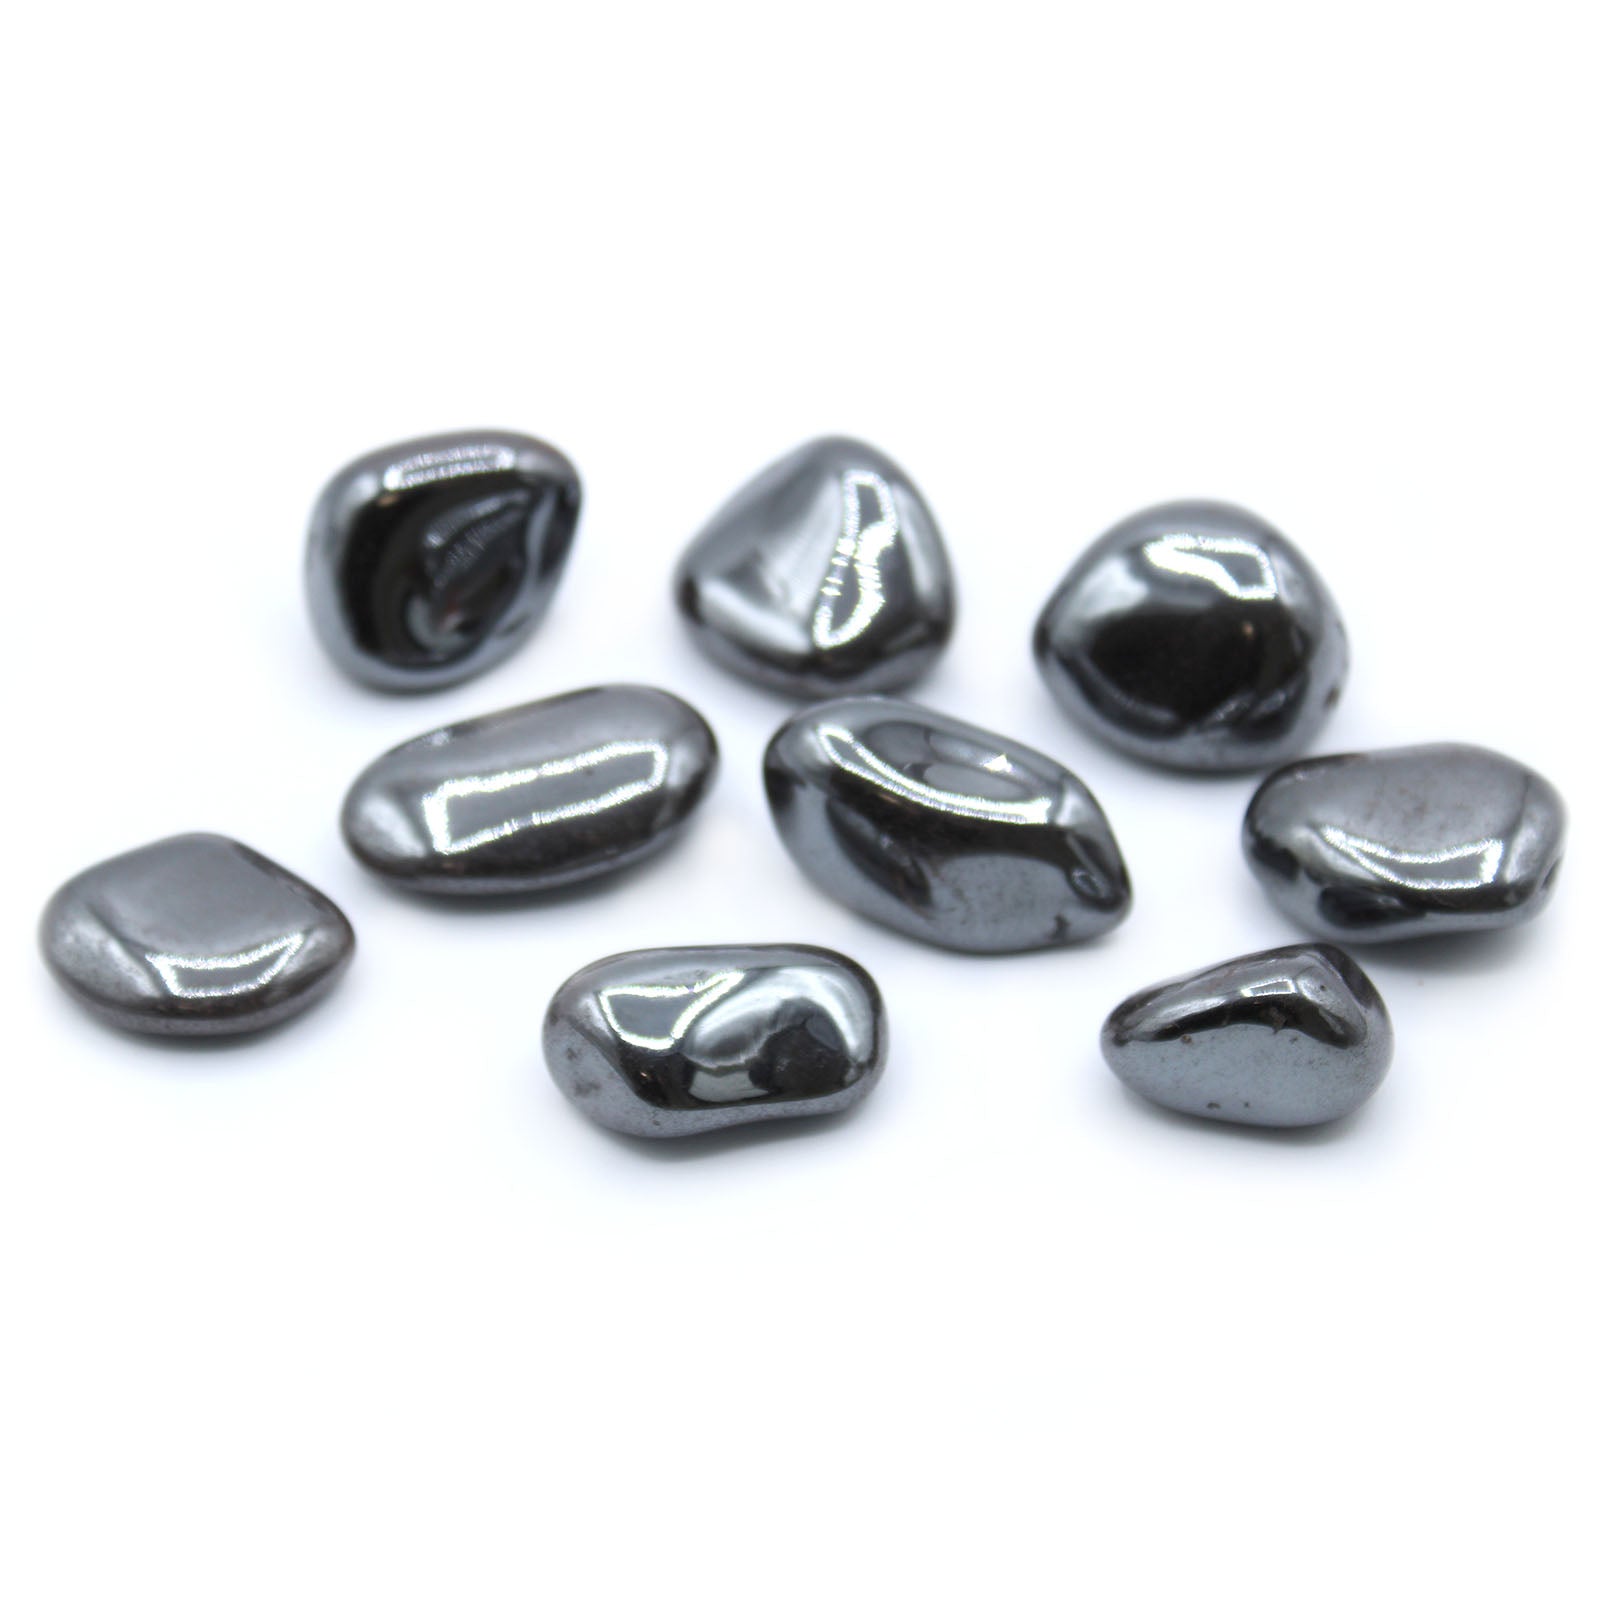 Tumble Stone - Hematite